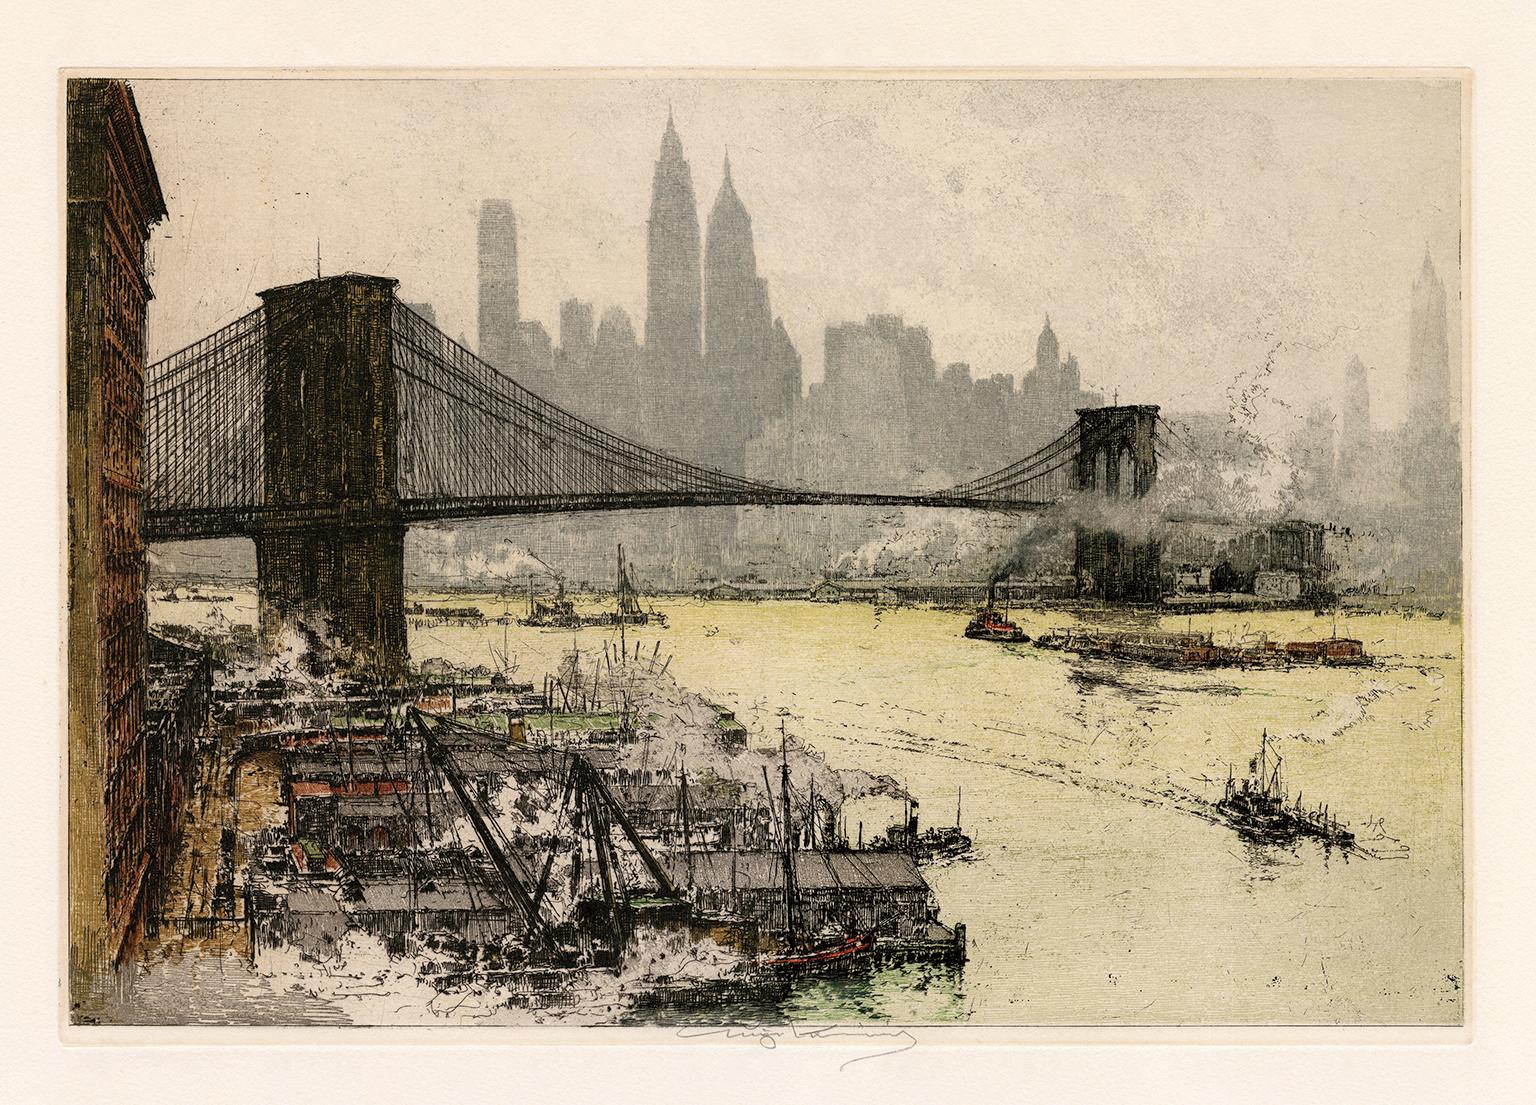 'Brooklyn Bridge' — 1920s view of an iconic New York City landmark